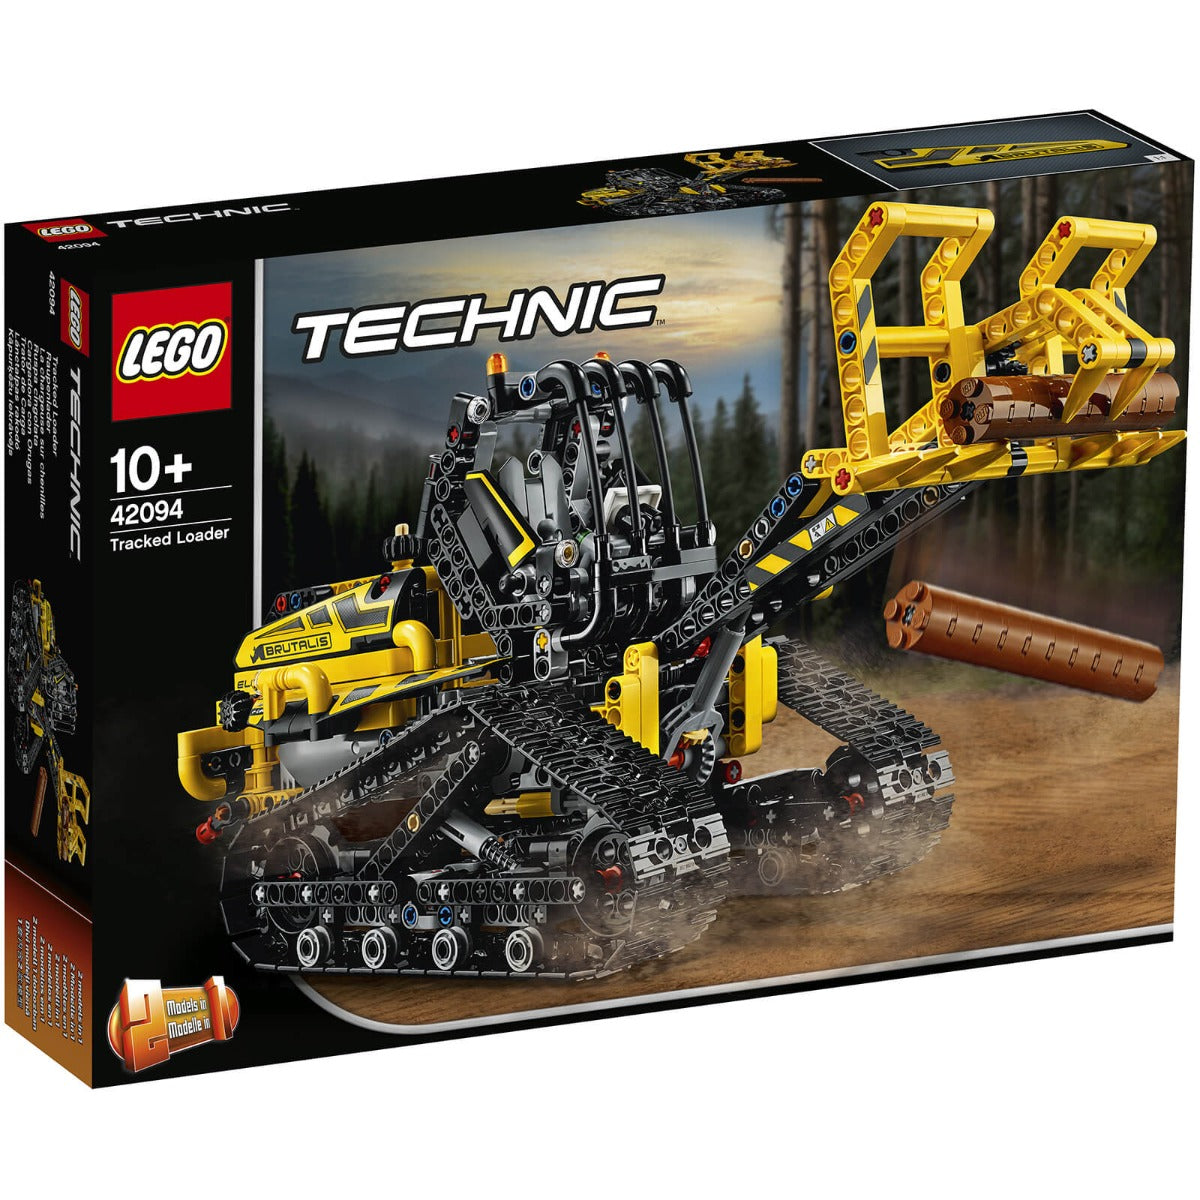 Lego Technic Tracked Loader 42094